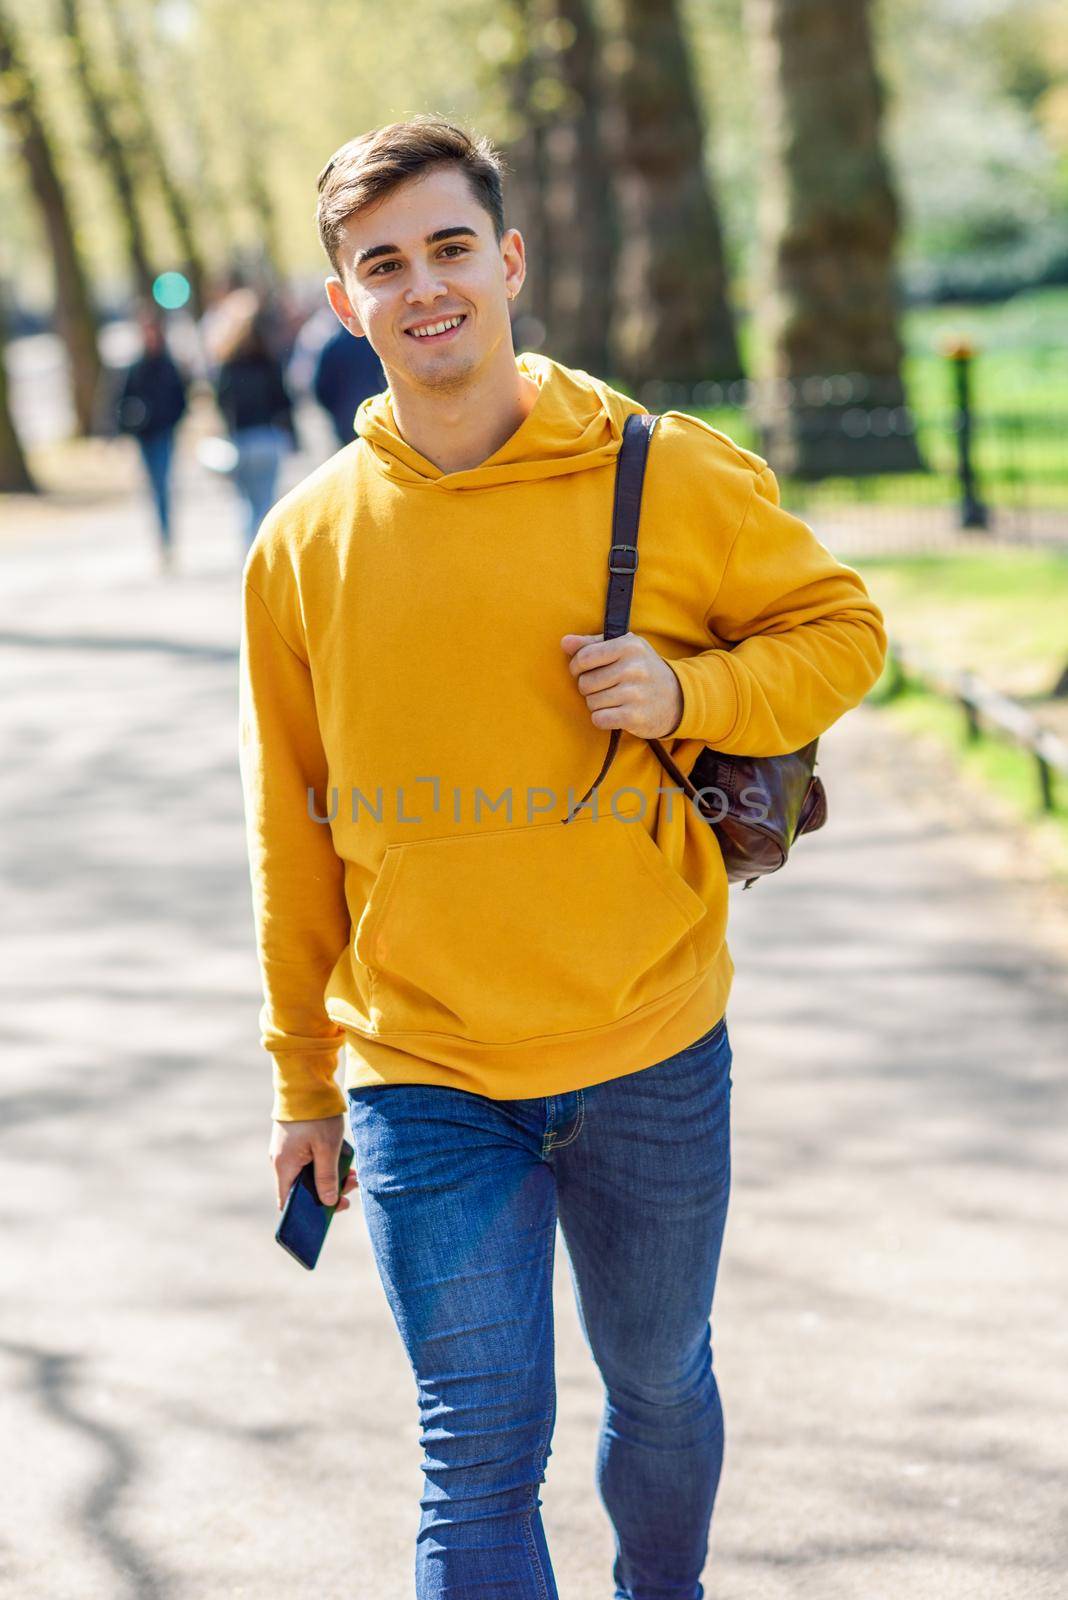 Young urban man using smartphone walking in street in an urban park in London, UK.